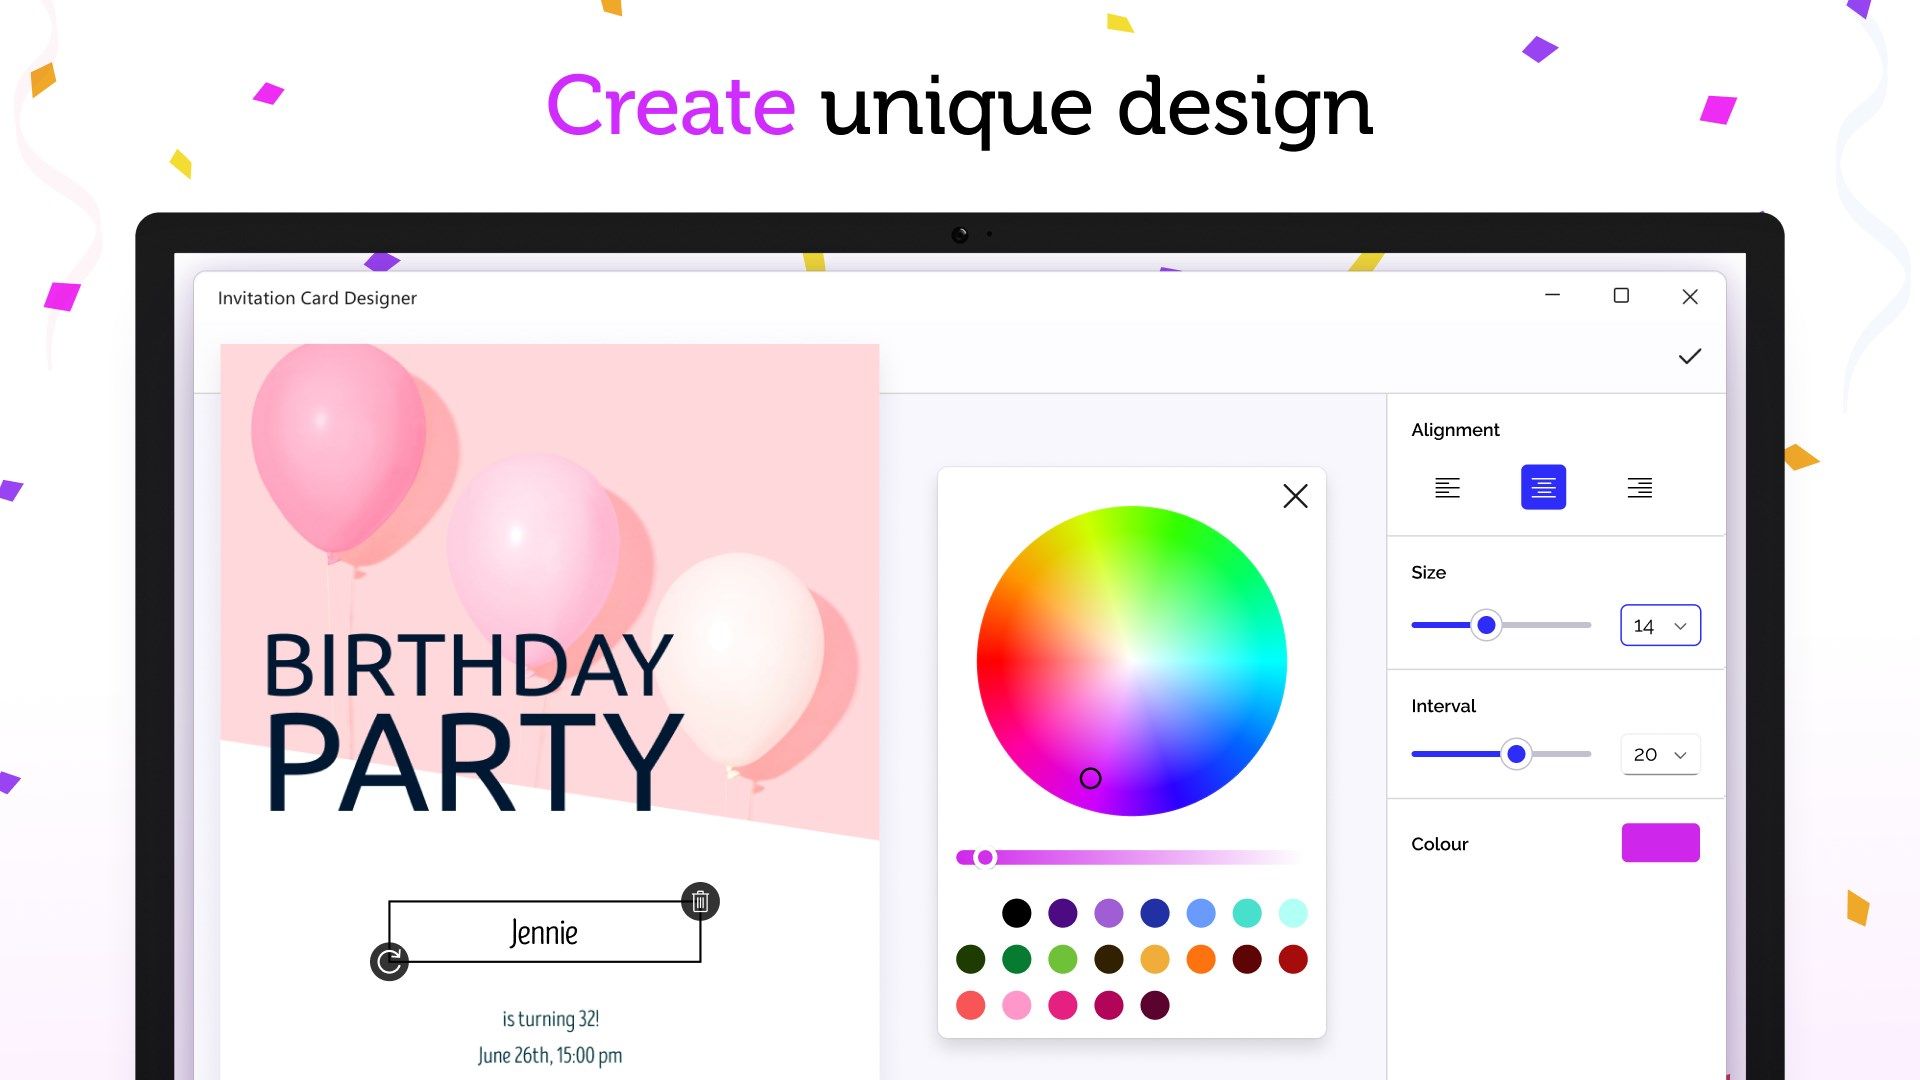 Invitation Card Designer - Templates for party invites